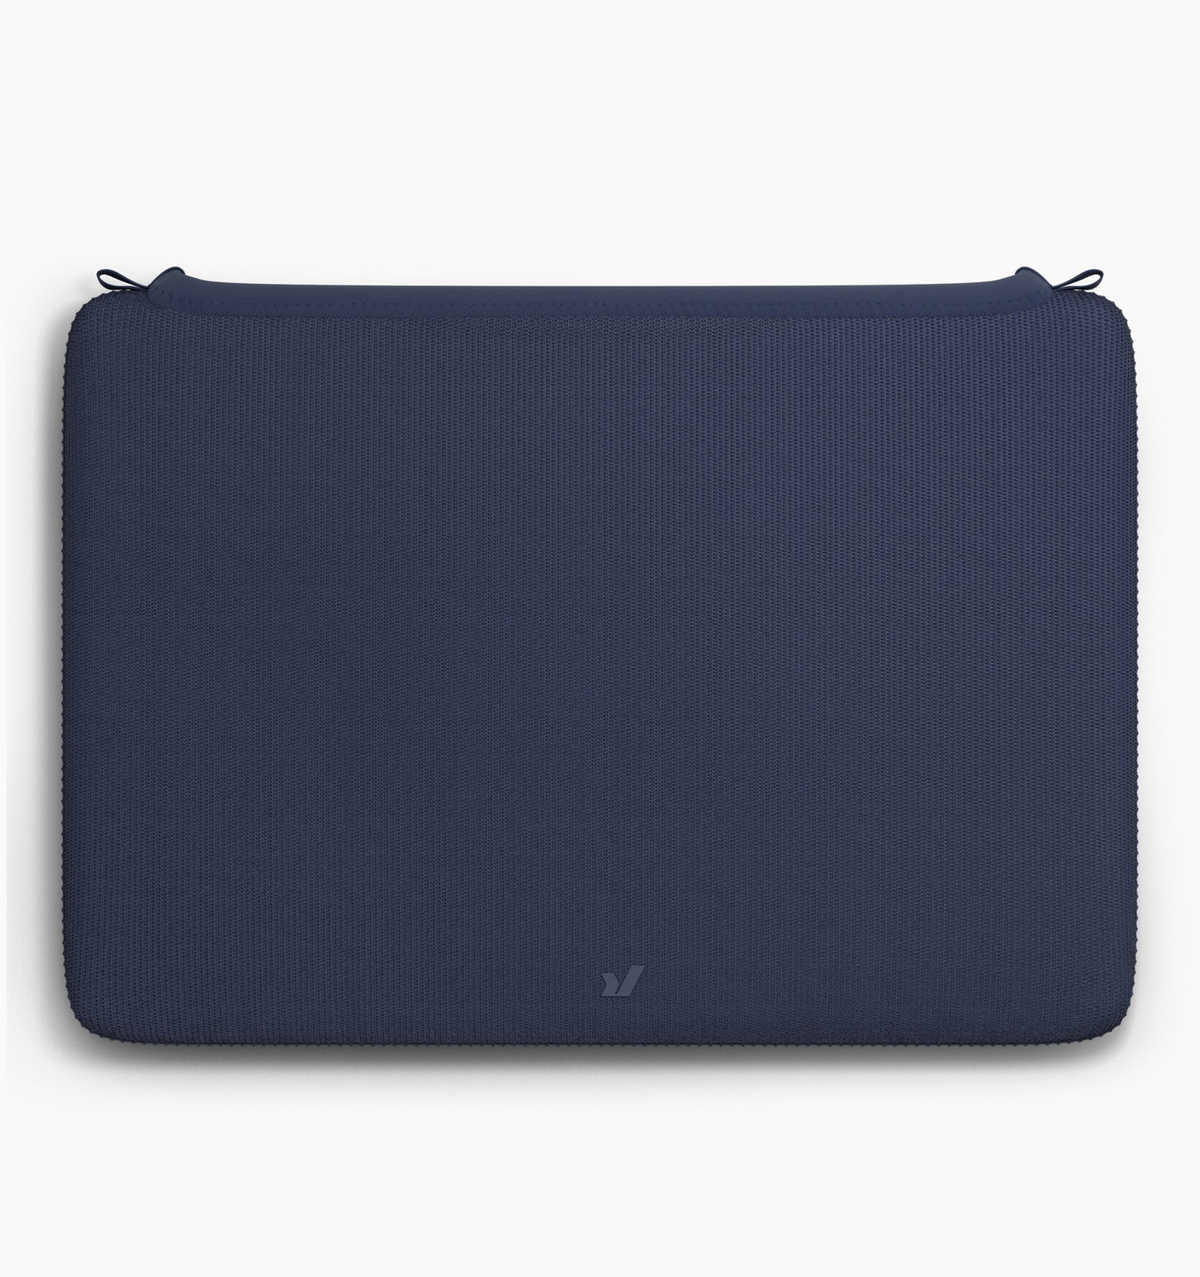 Rushfaster Laptop Sleeve For 14" MacBook Pro - Navy